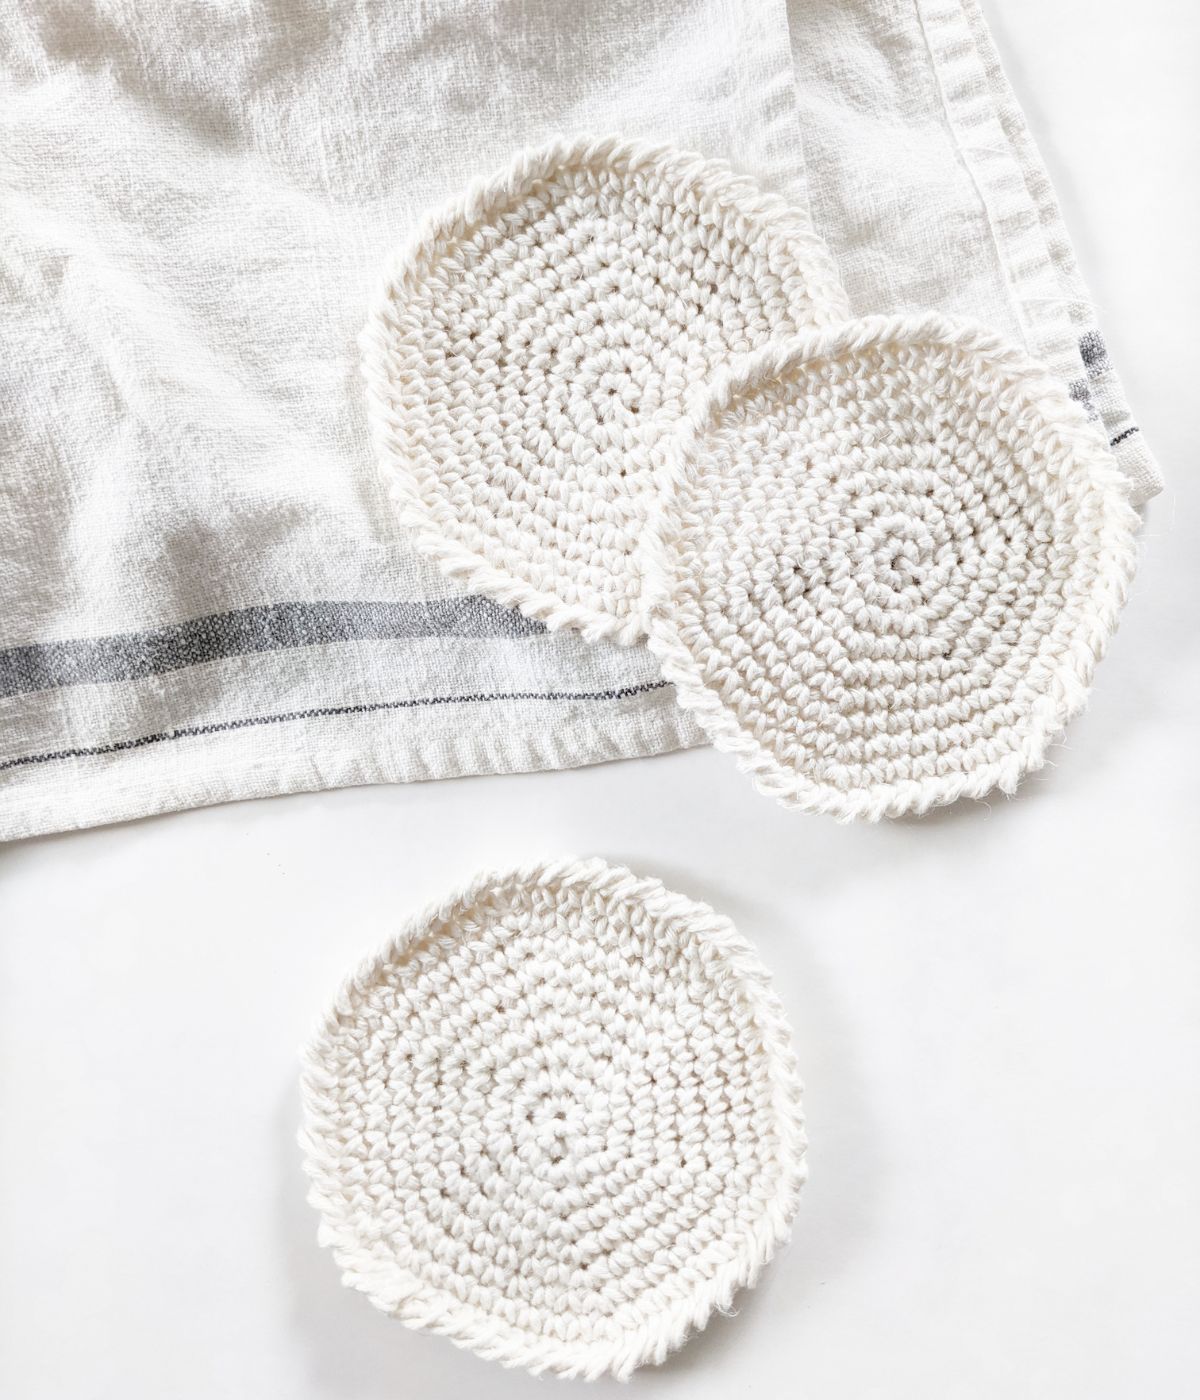 crochet flat circle coaster made using single crochet stitches 